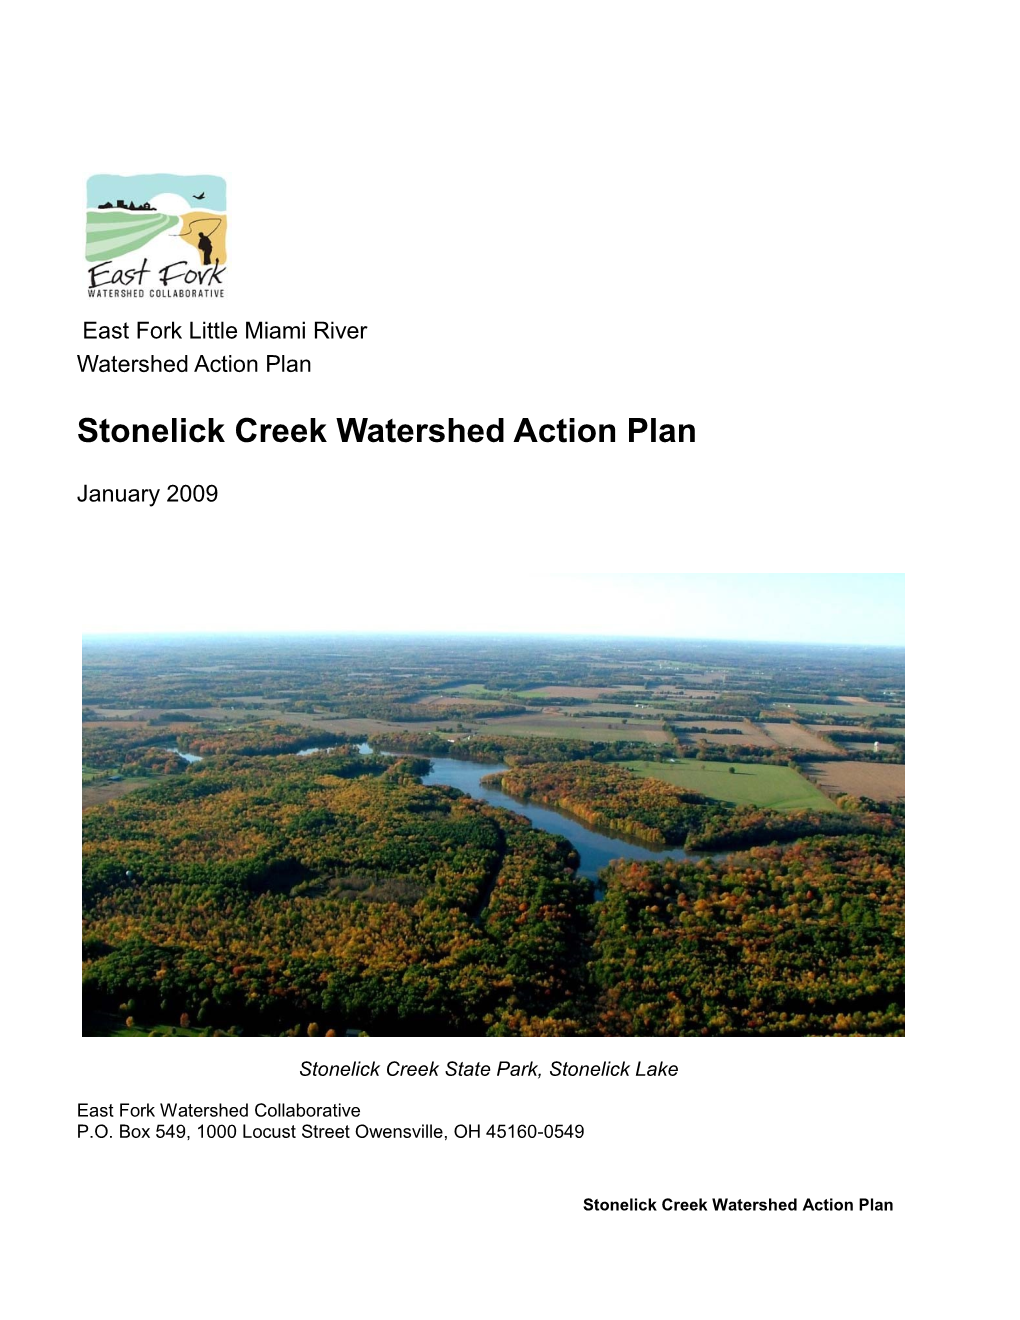 Stonelick Creek Watershed Action Plan